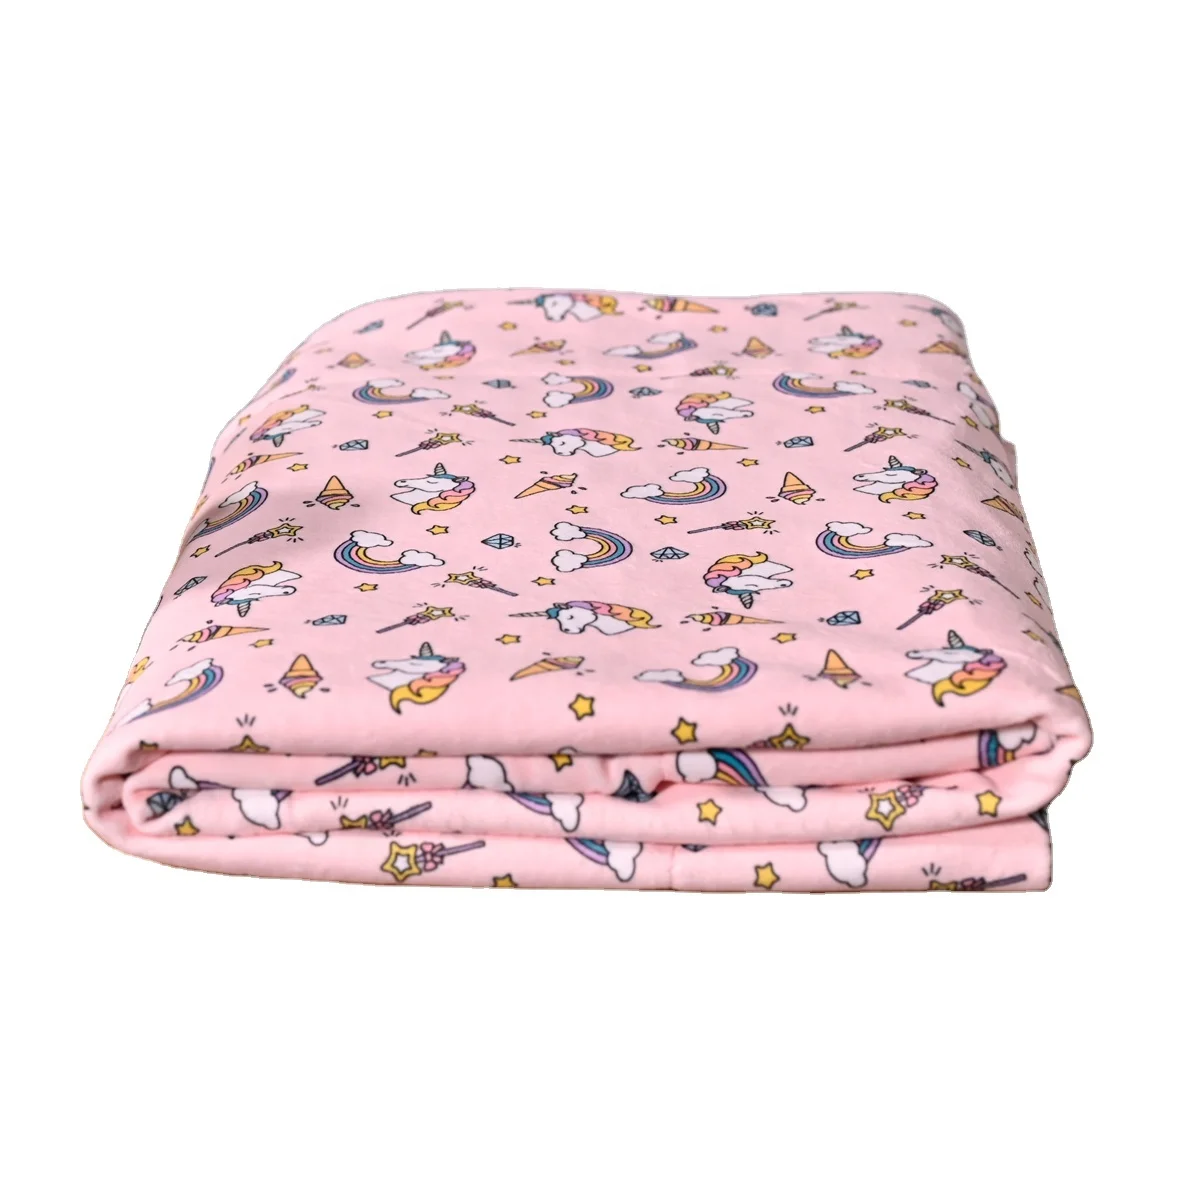 Cozy Bliss Unicorn Baby Blanket For Baby Cheap Bamboo Cotton Newborn Blanket Buy Bamboo Cotton Throw Blanket